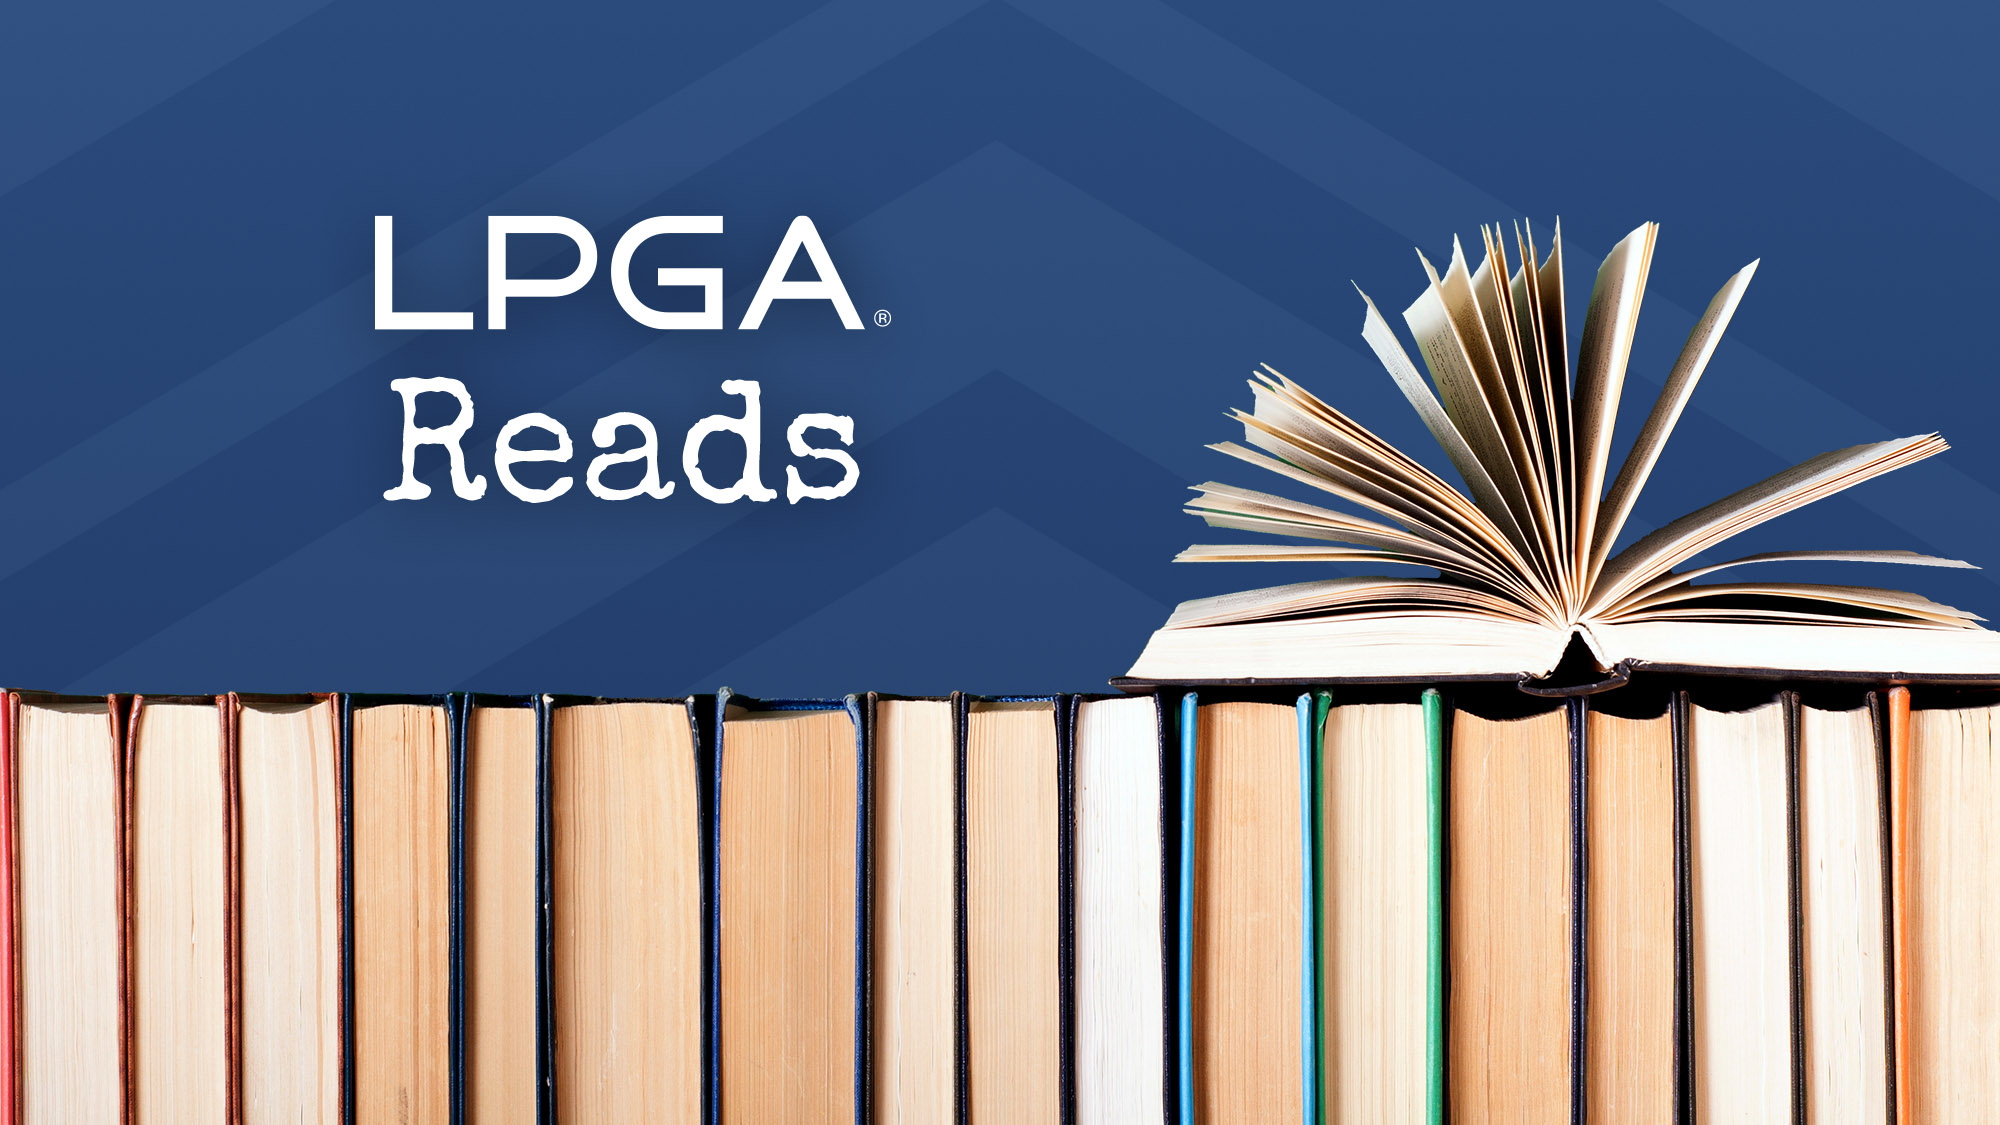 LPGA Reads